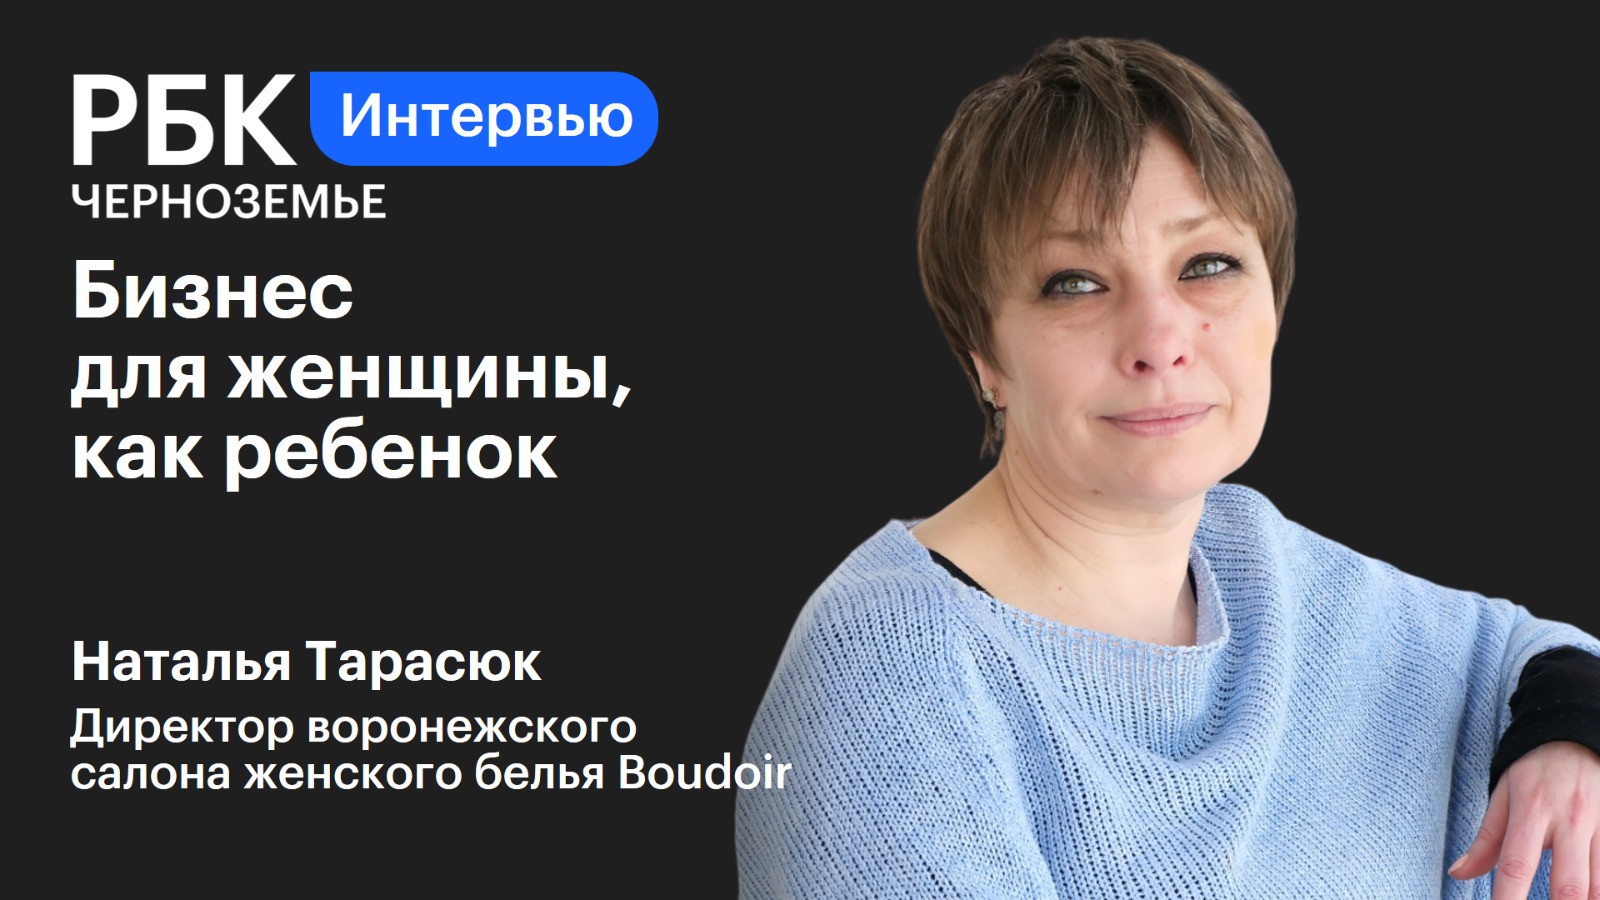 Наталья Тарасюк: «Бизнес для женщины, как ребенок»